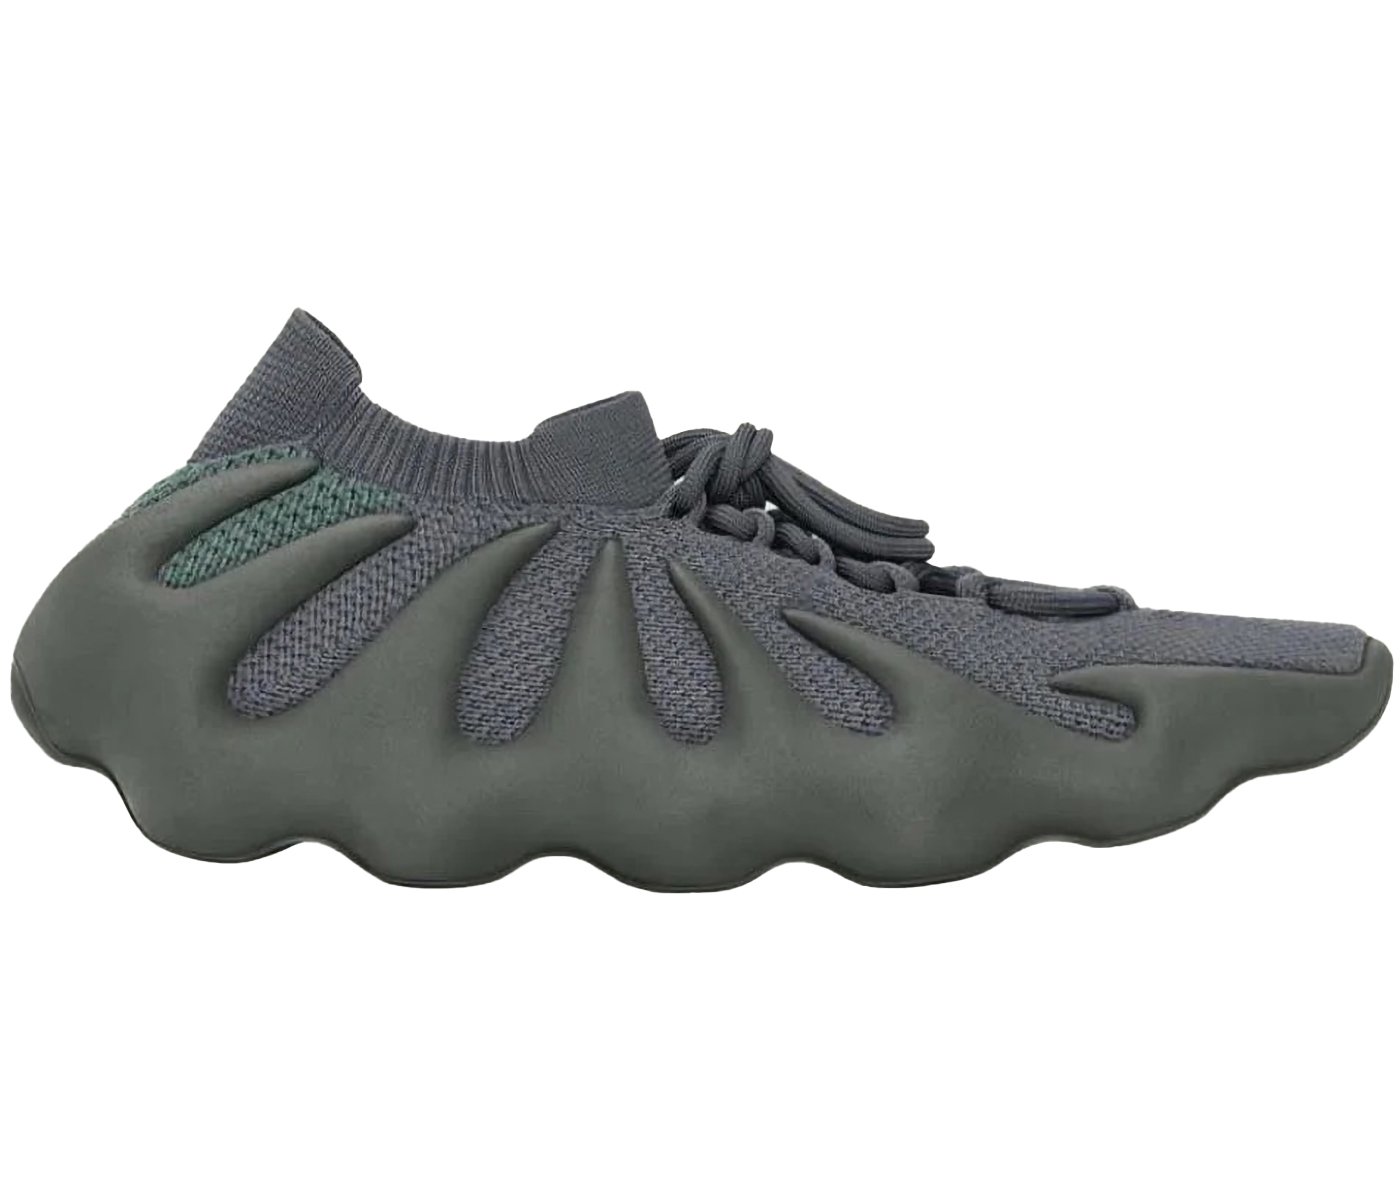 adidas Yeezy 450 Stone Teal sneakers